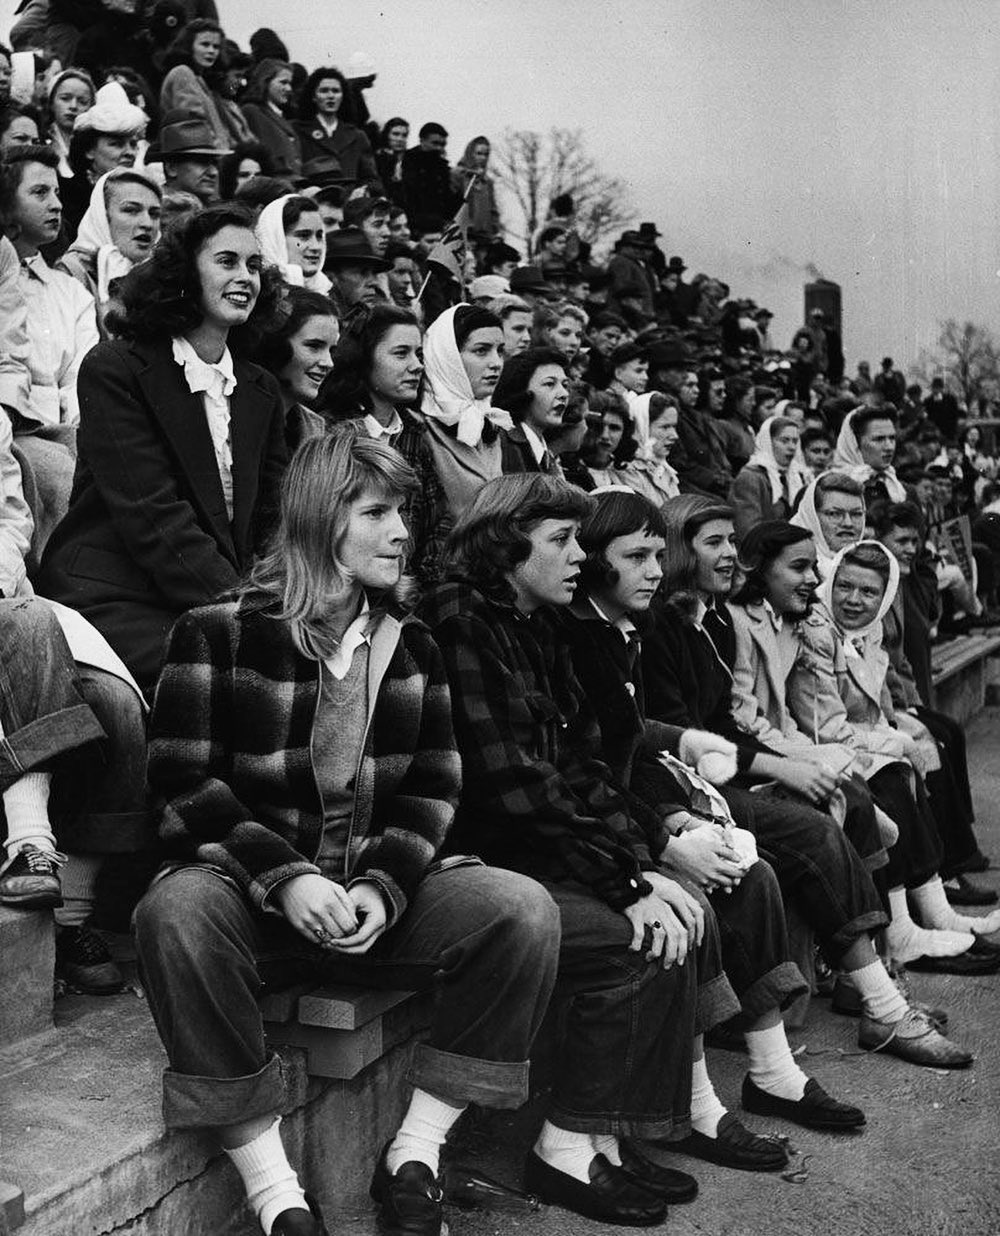 historical photos - high school 50s teenager fashion - Co